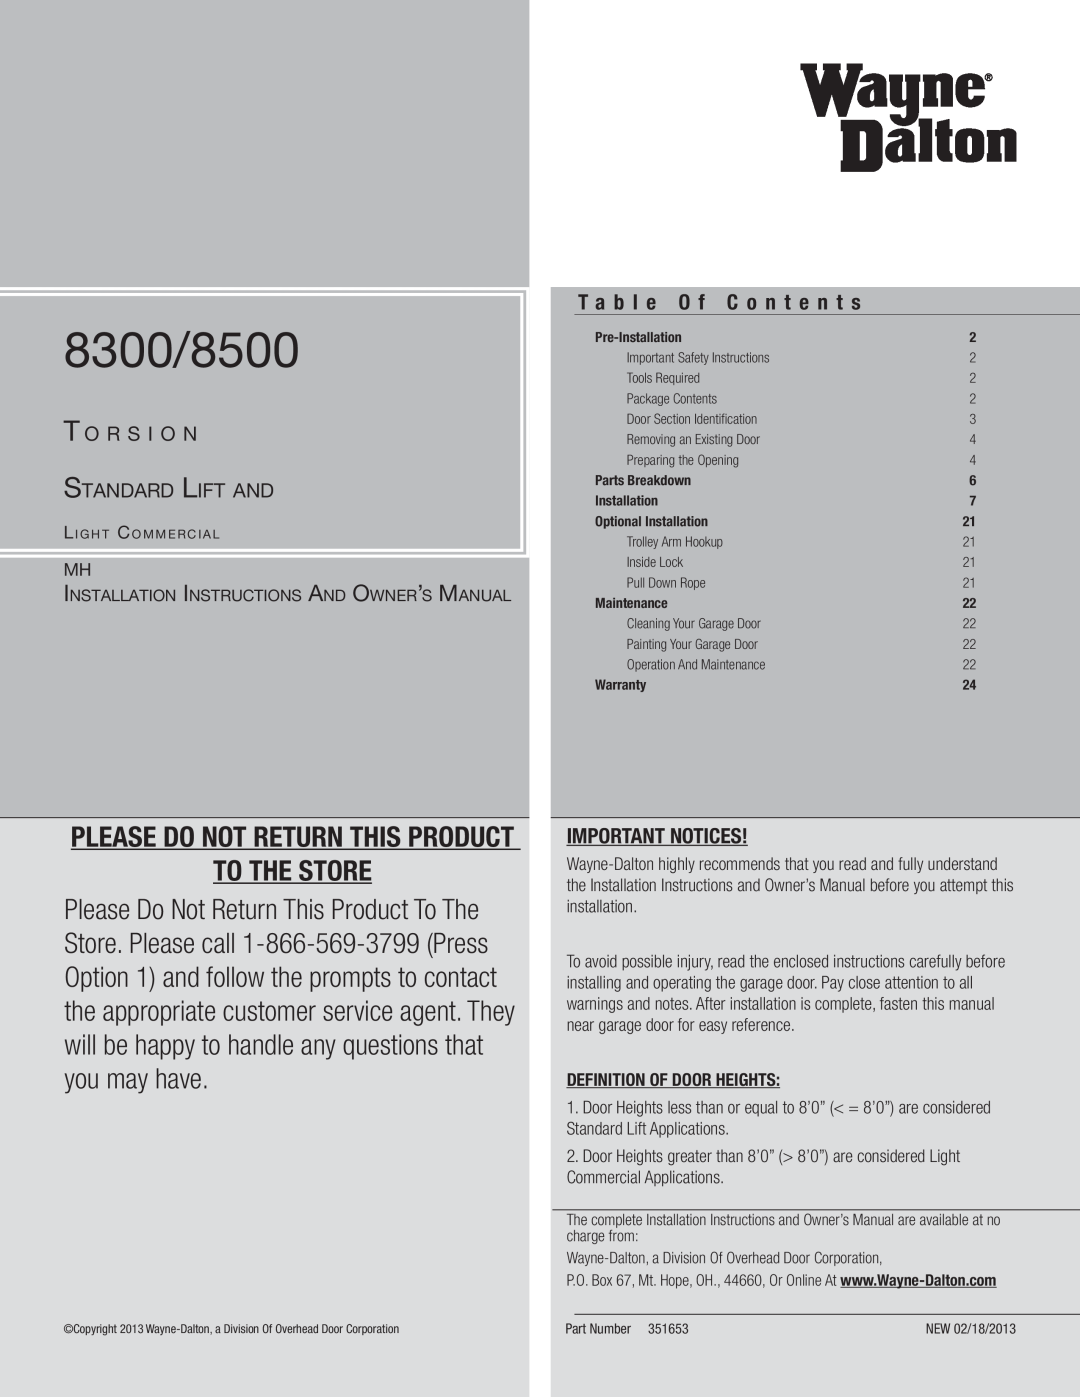 Wayne-Dalton 8300/8500 installation instructions T a b l e O f C o n t e n t s, Important Notices 